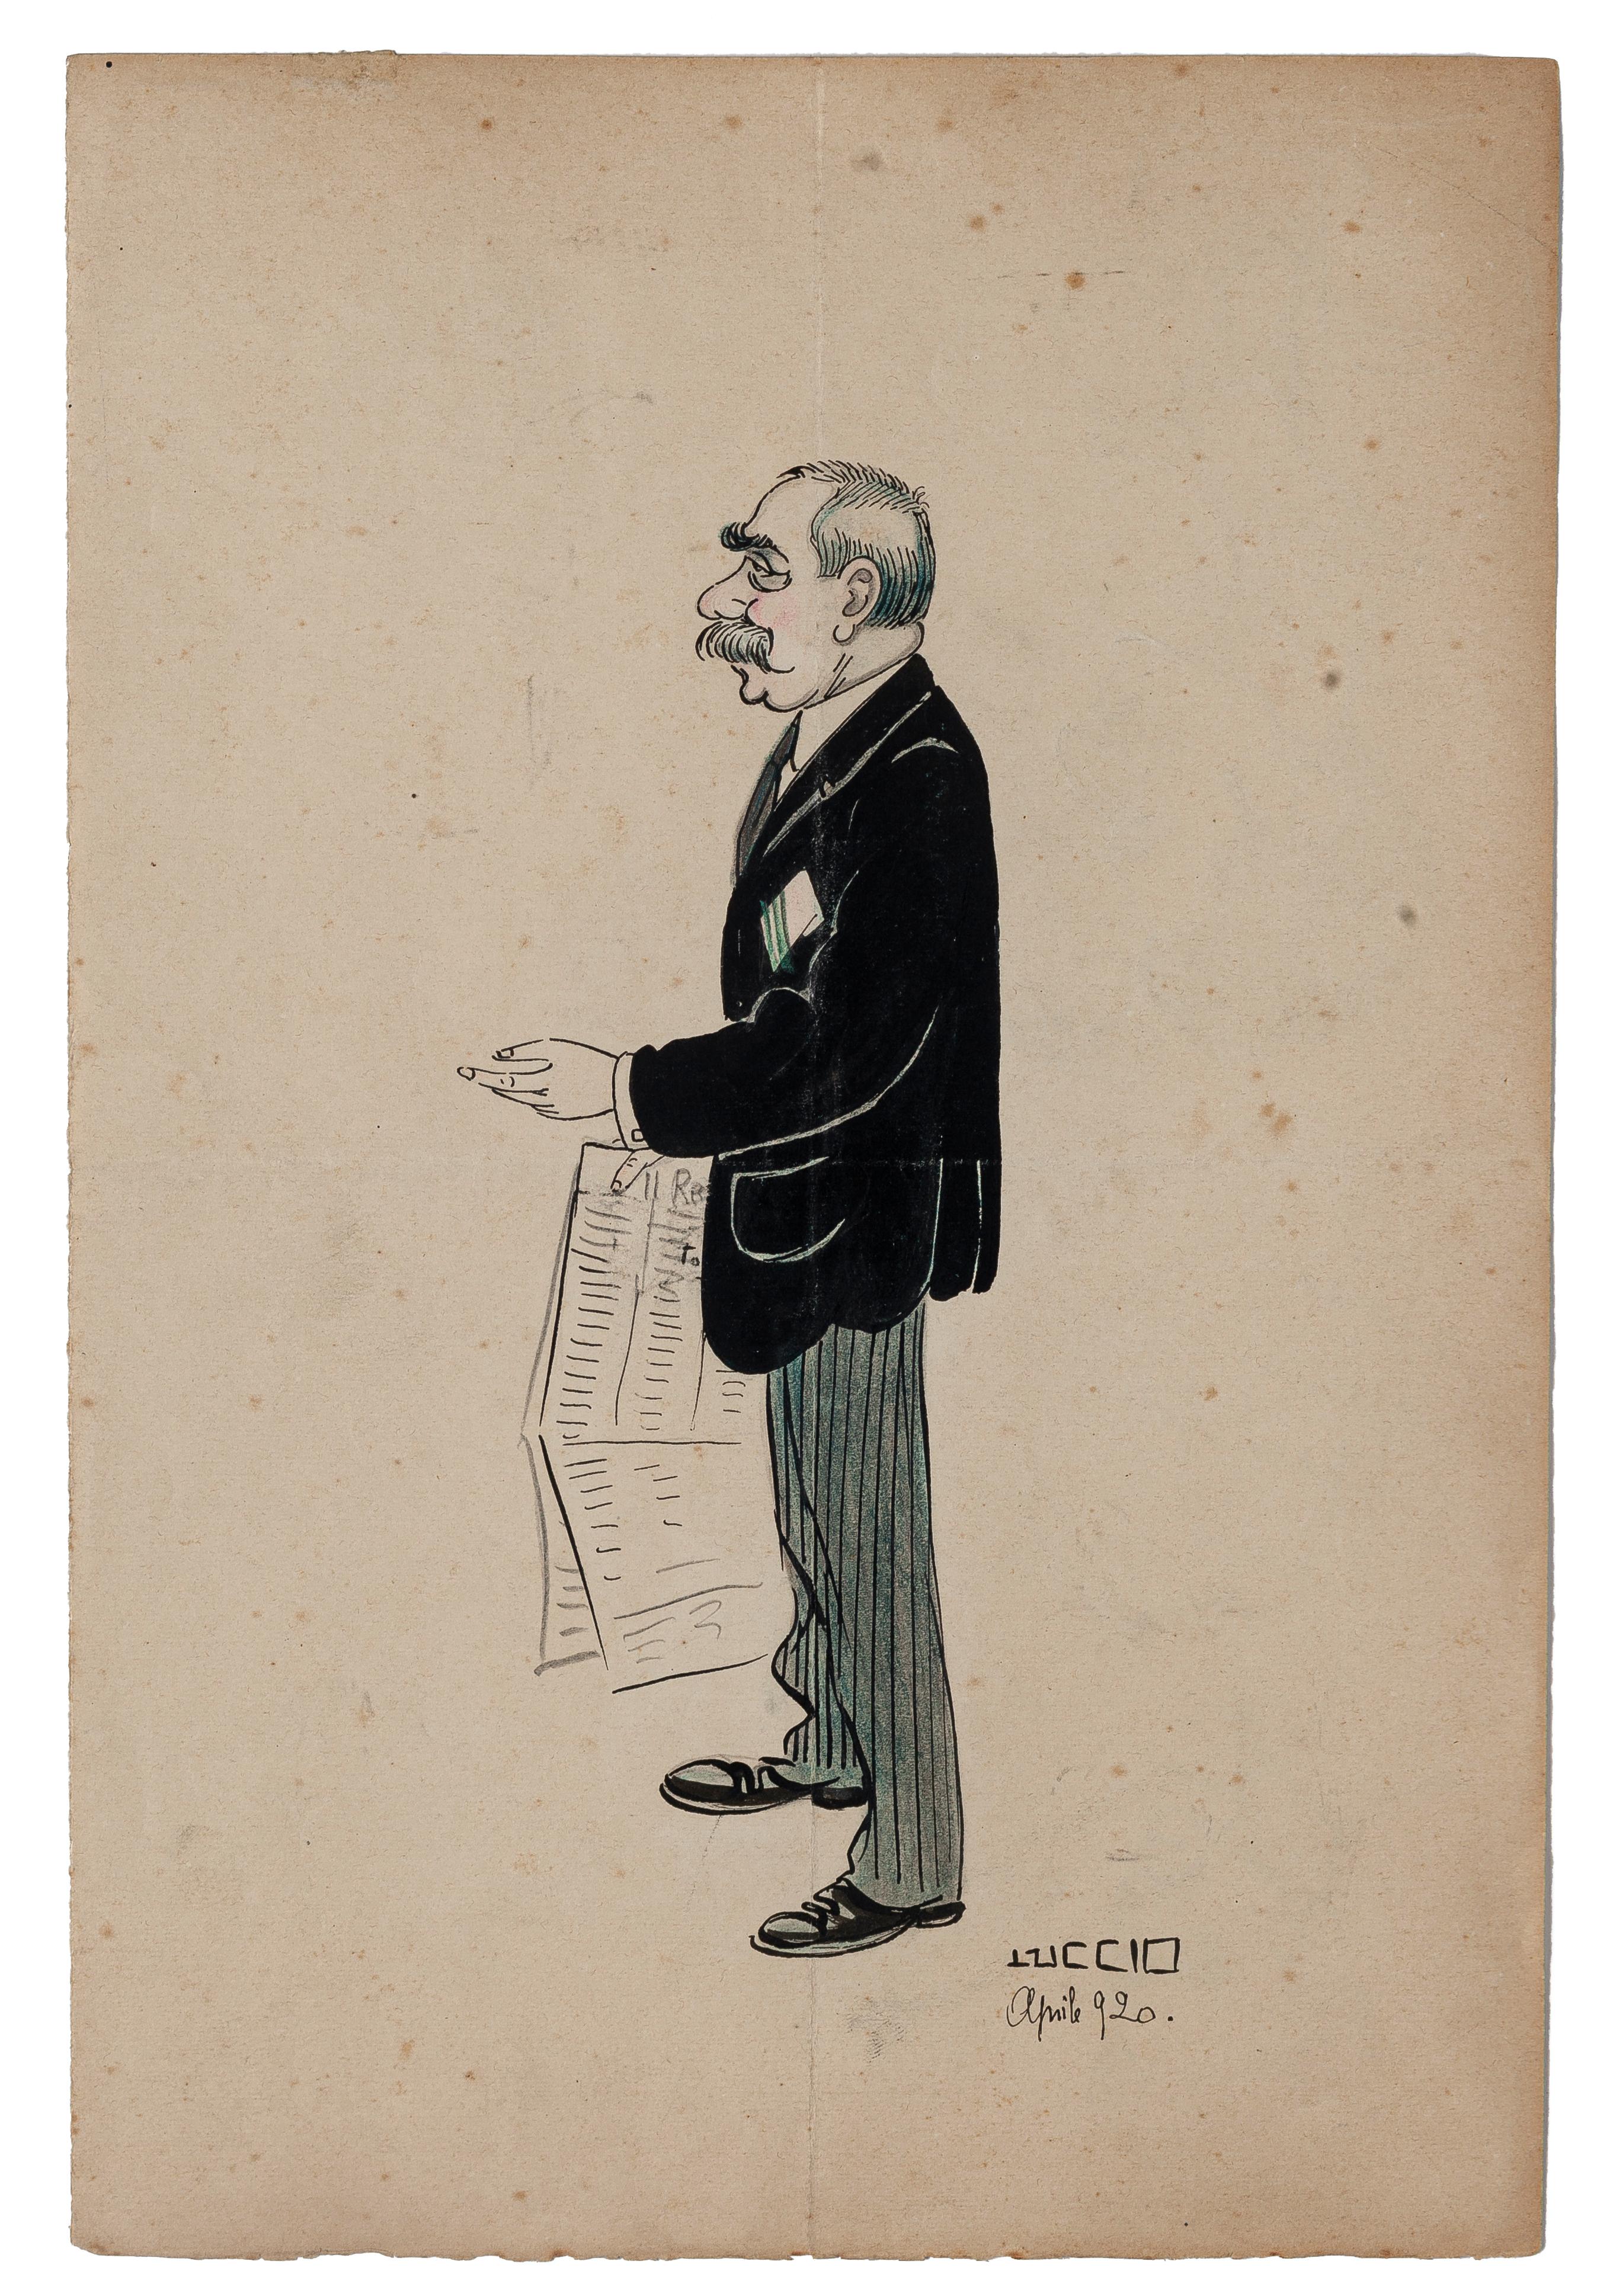 Politician - Original Ink and Watercolor Drawing by Luccio - 1920s - Art by Luccio (Carlo Bolognesi)